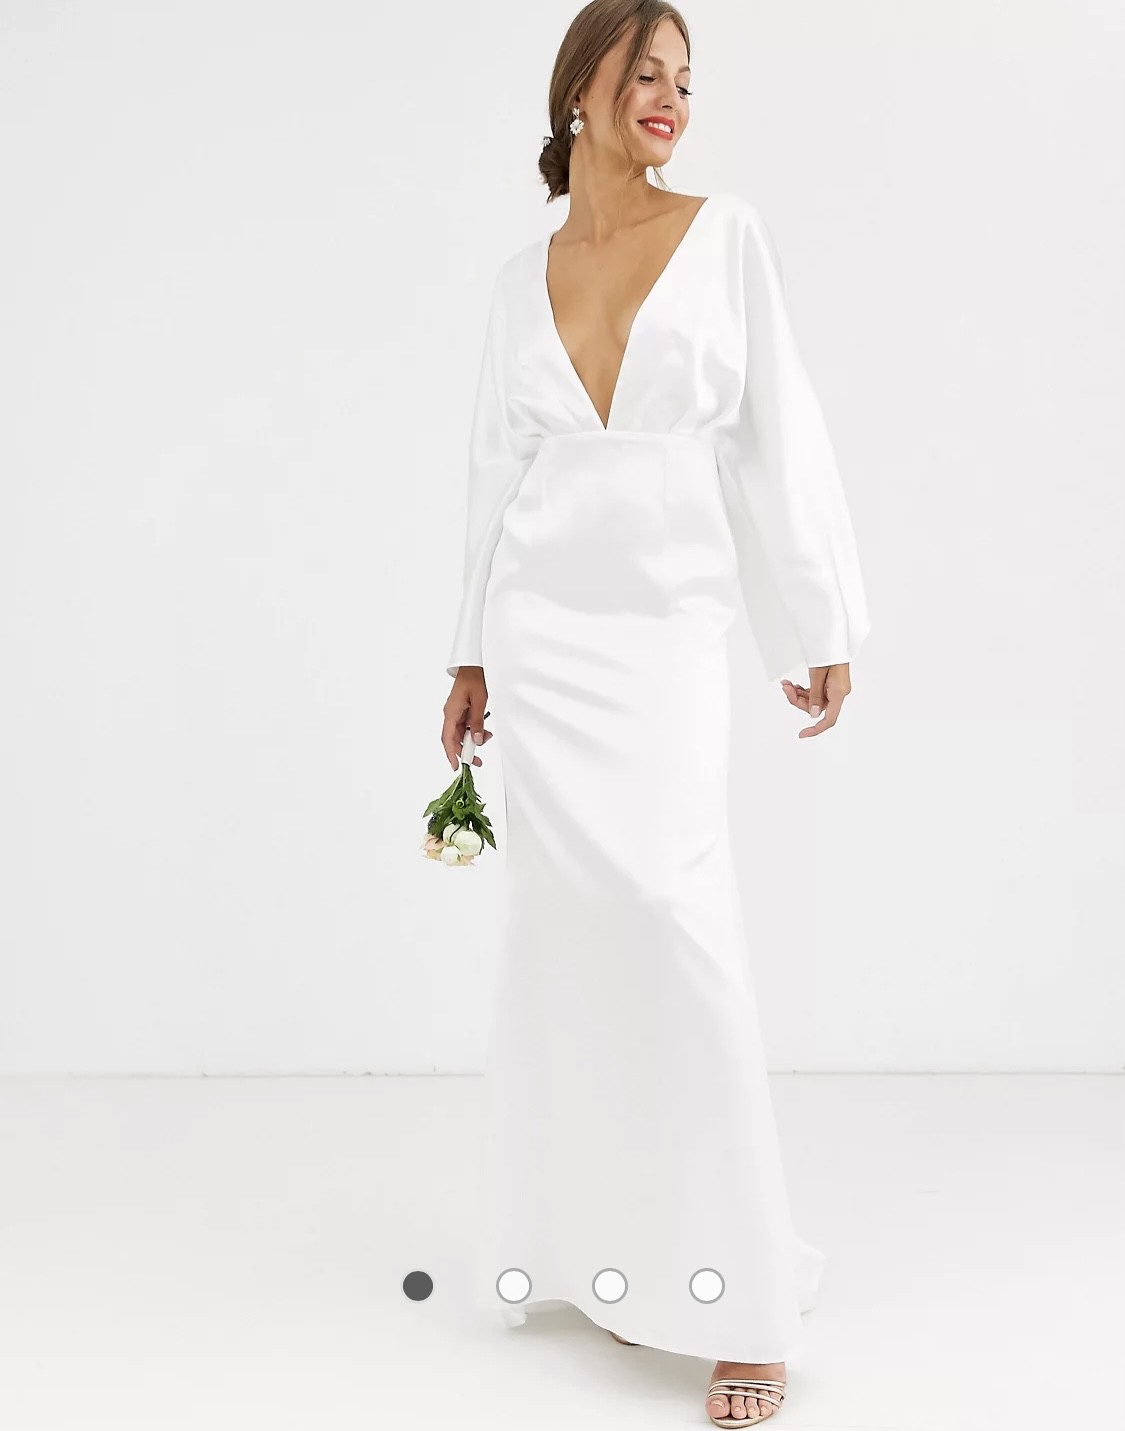 ASOS Bridal New Wedding Dress Save 43% - Stillwhite